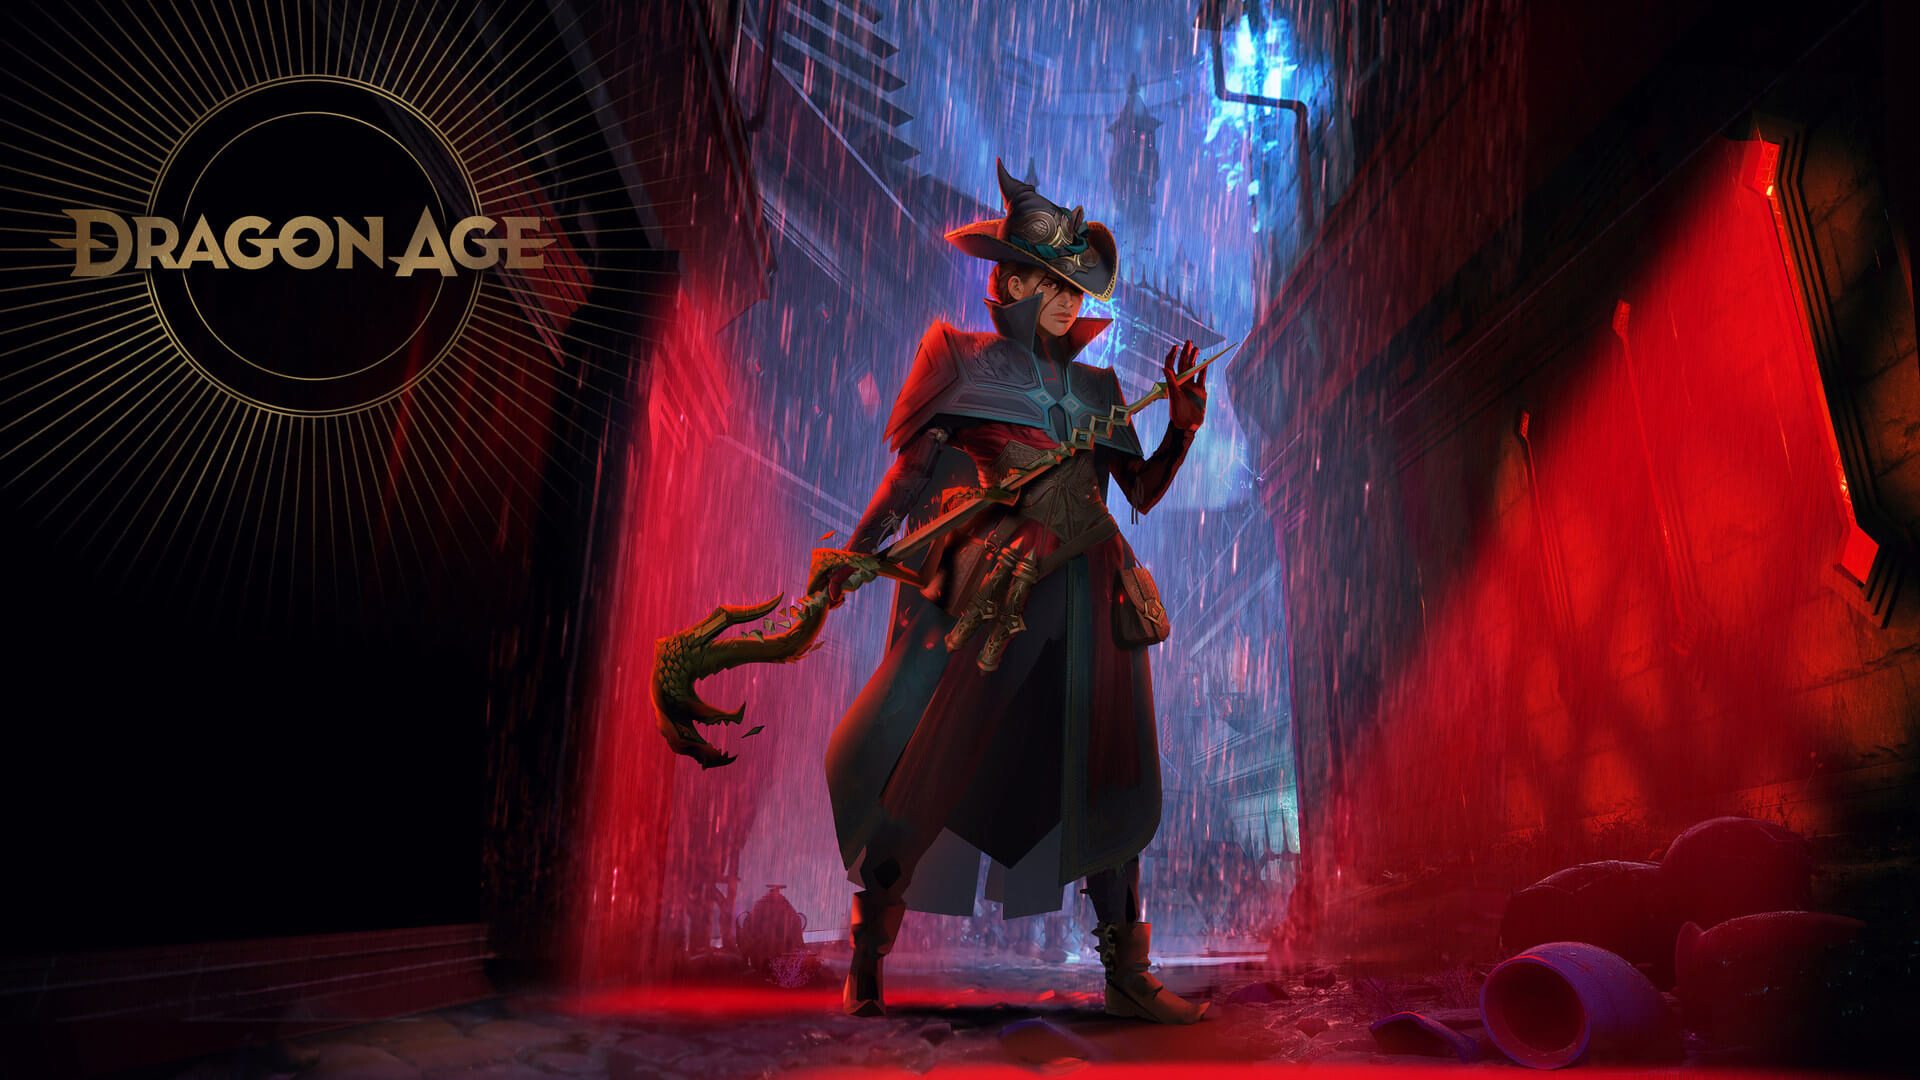 Bioware shares new concept artwork for Dragon Age